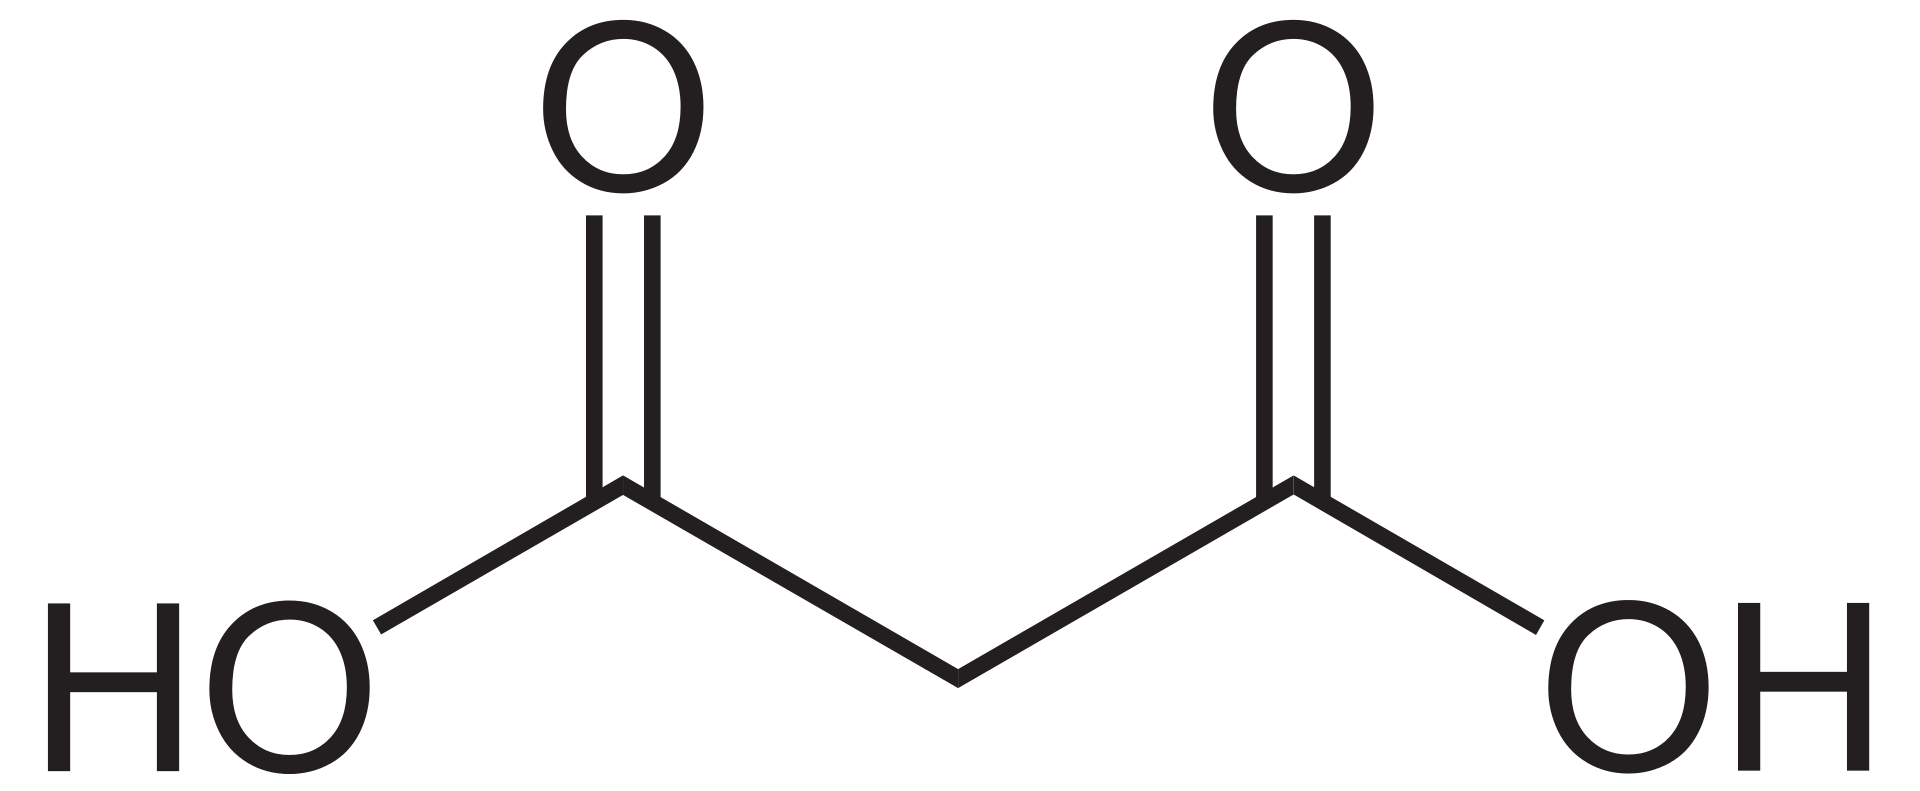 Molecular structure of malonic acid